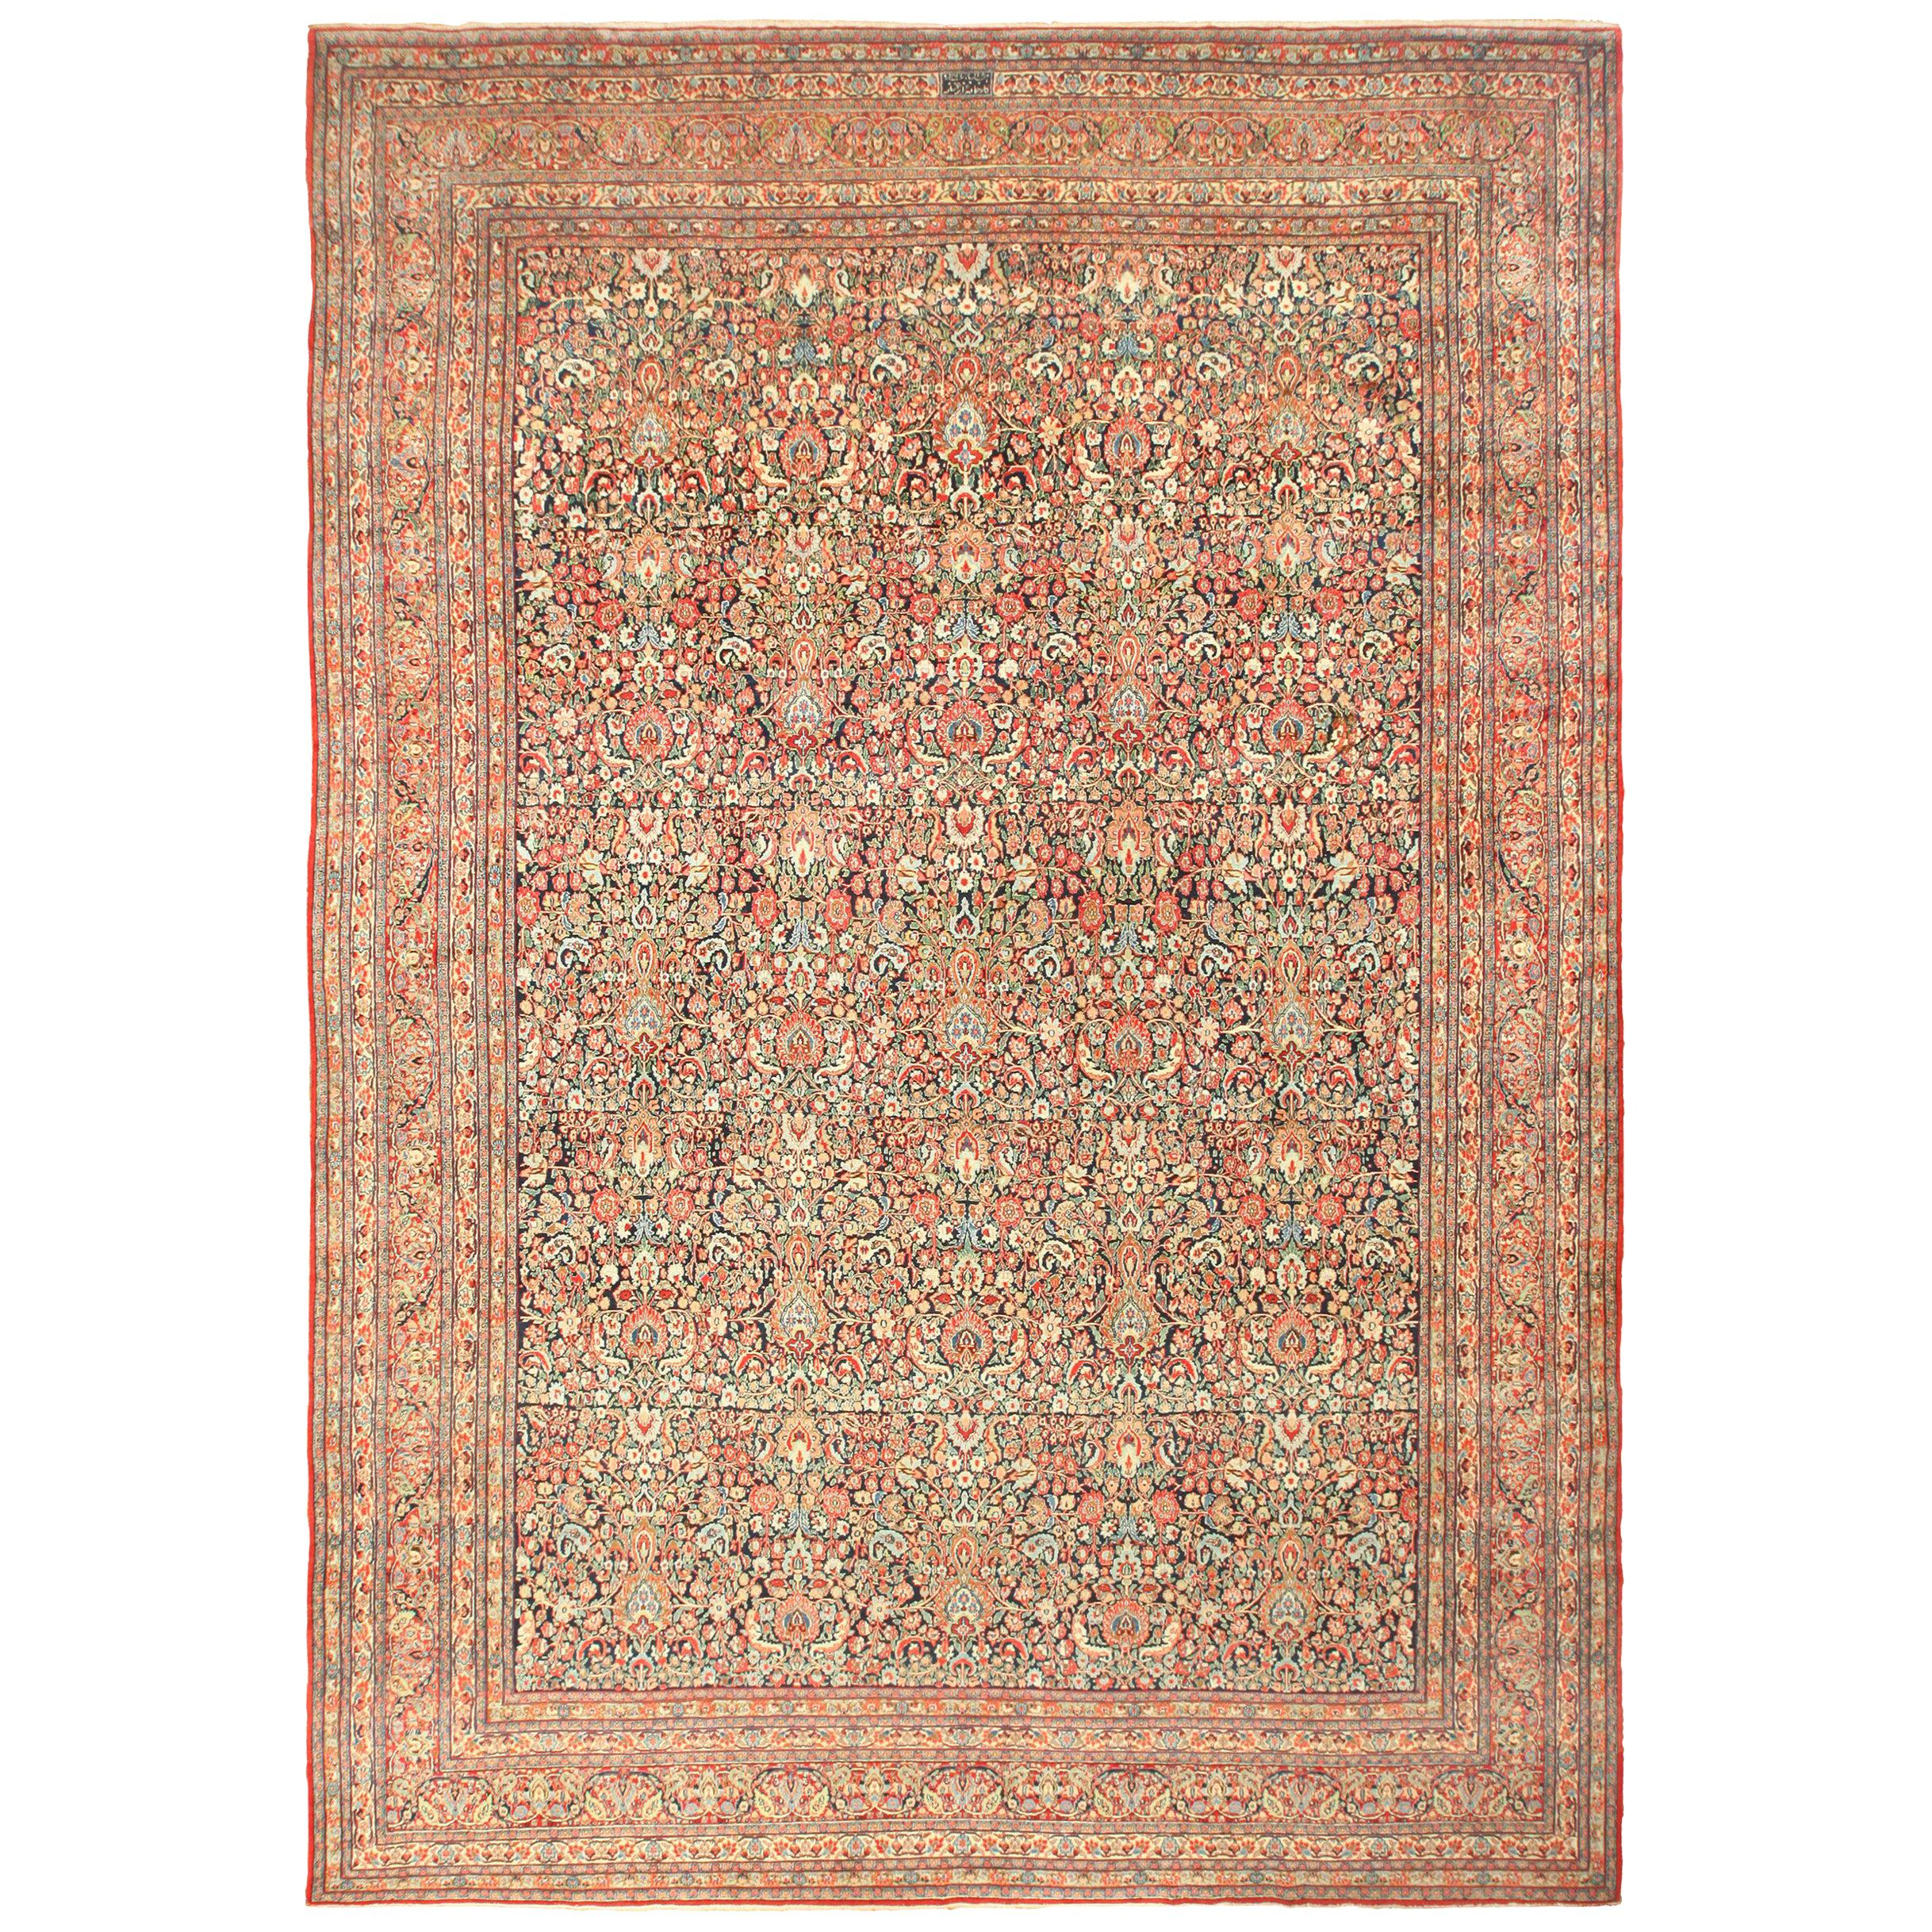 Nazmiyal Collection Antique Persian Khorassan Rug. Size: 13' 3" x 19' 2" 